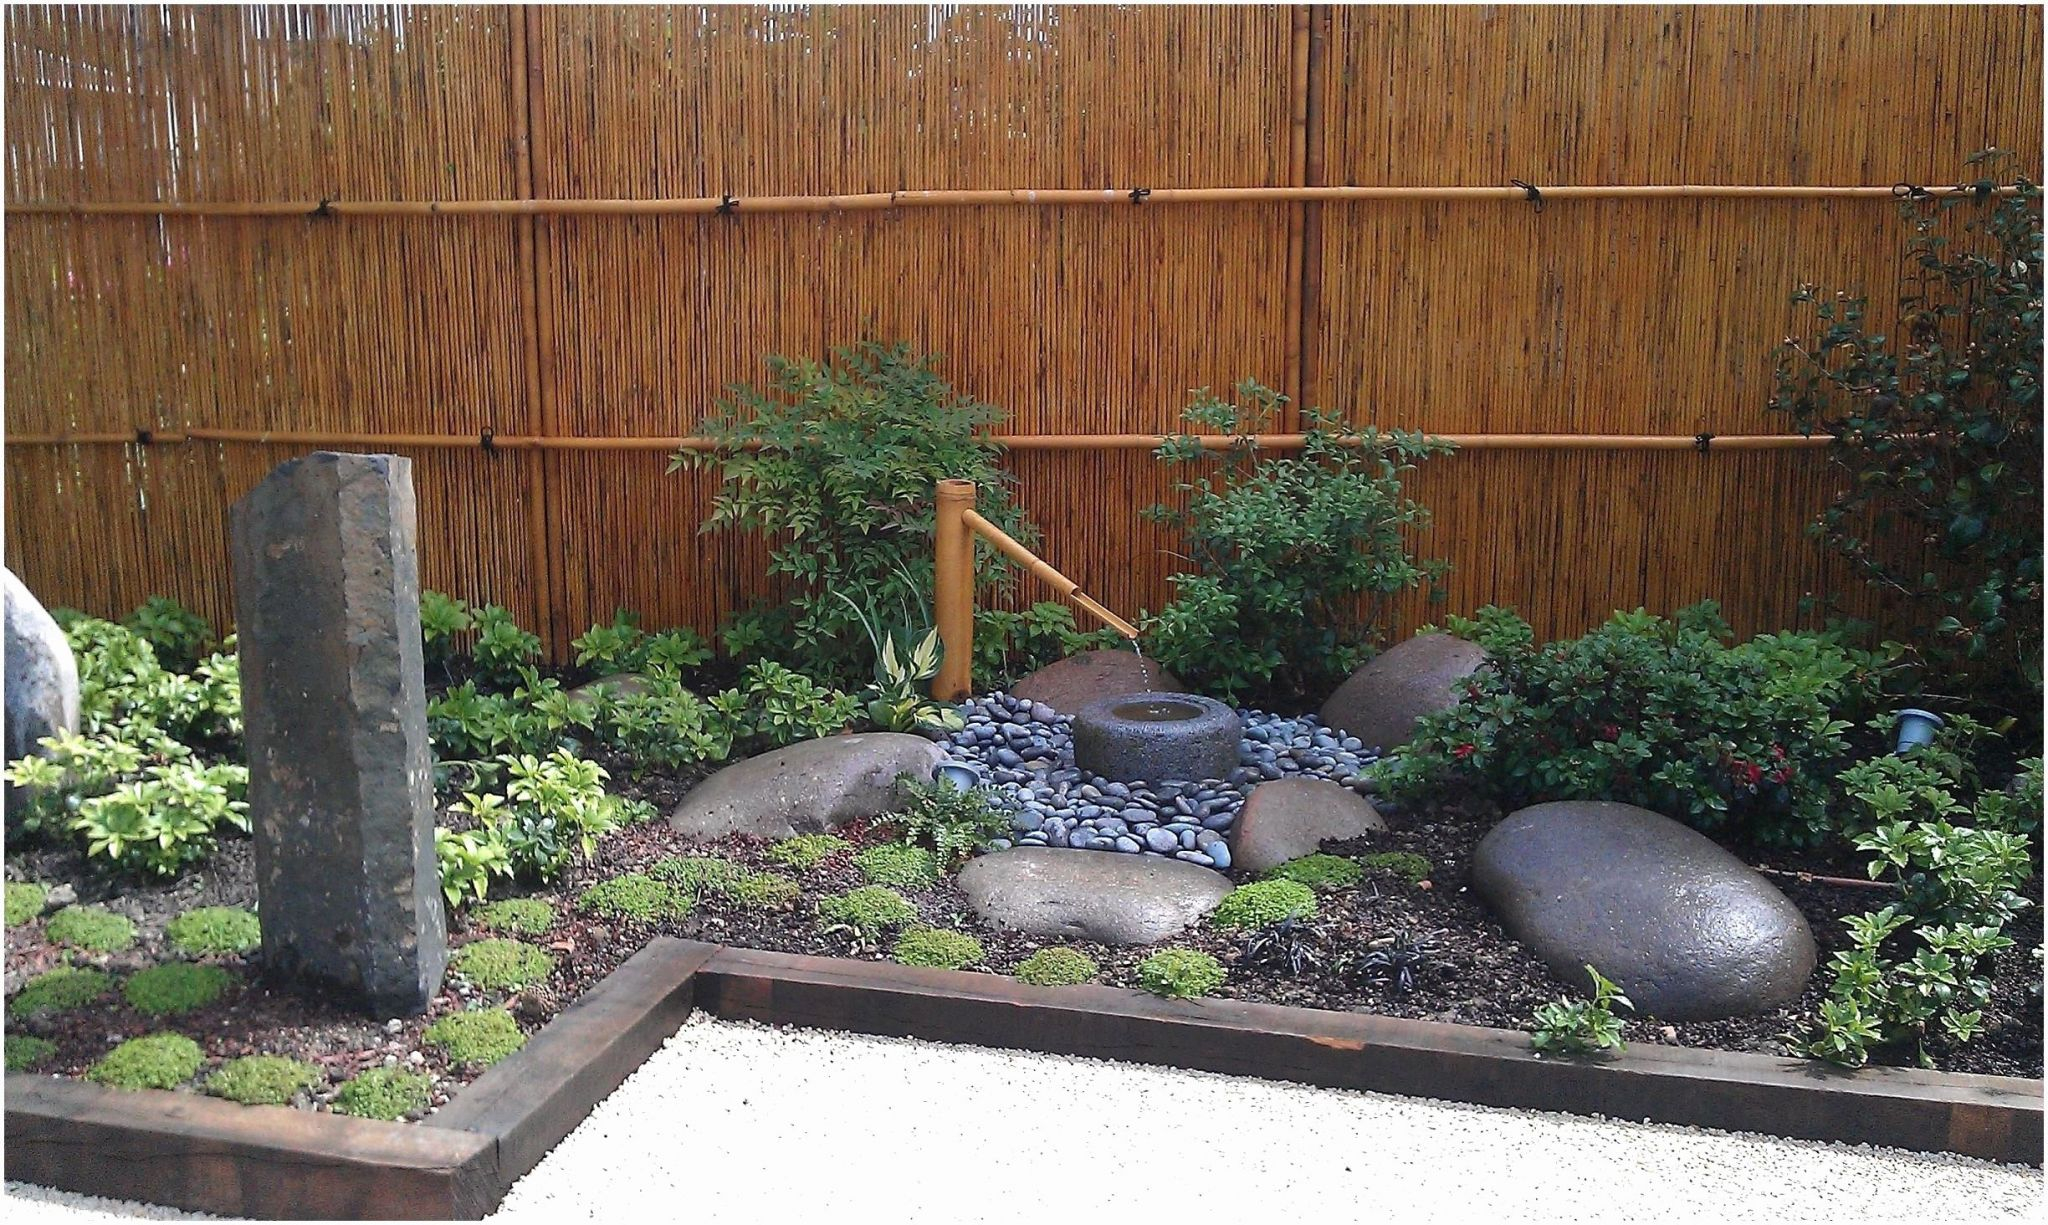 CrÃ©er Un Jardin Zen Creer Un Coin Zen Dans son Jardin Et Decoration Jardin Zen